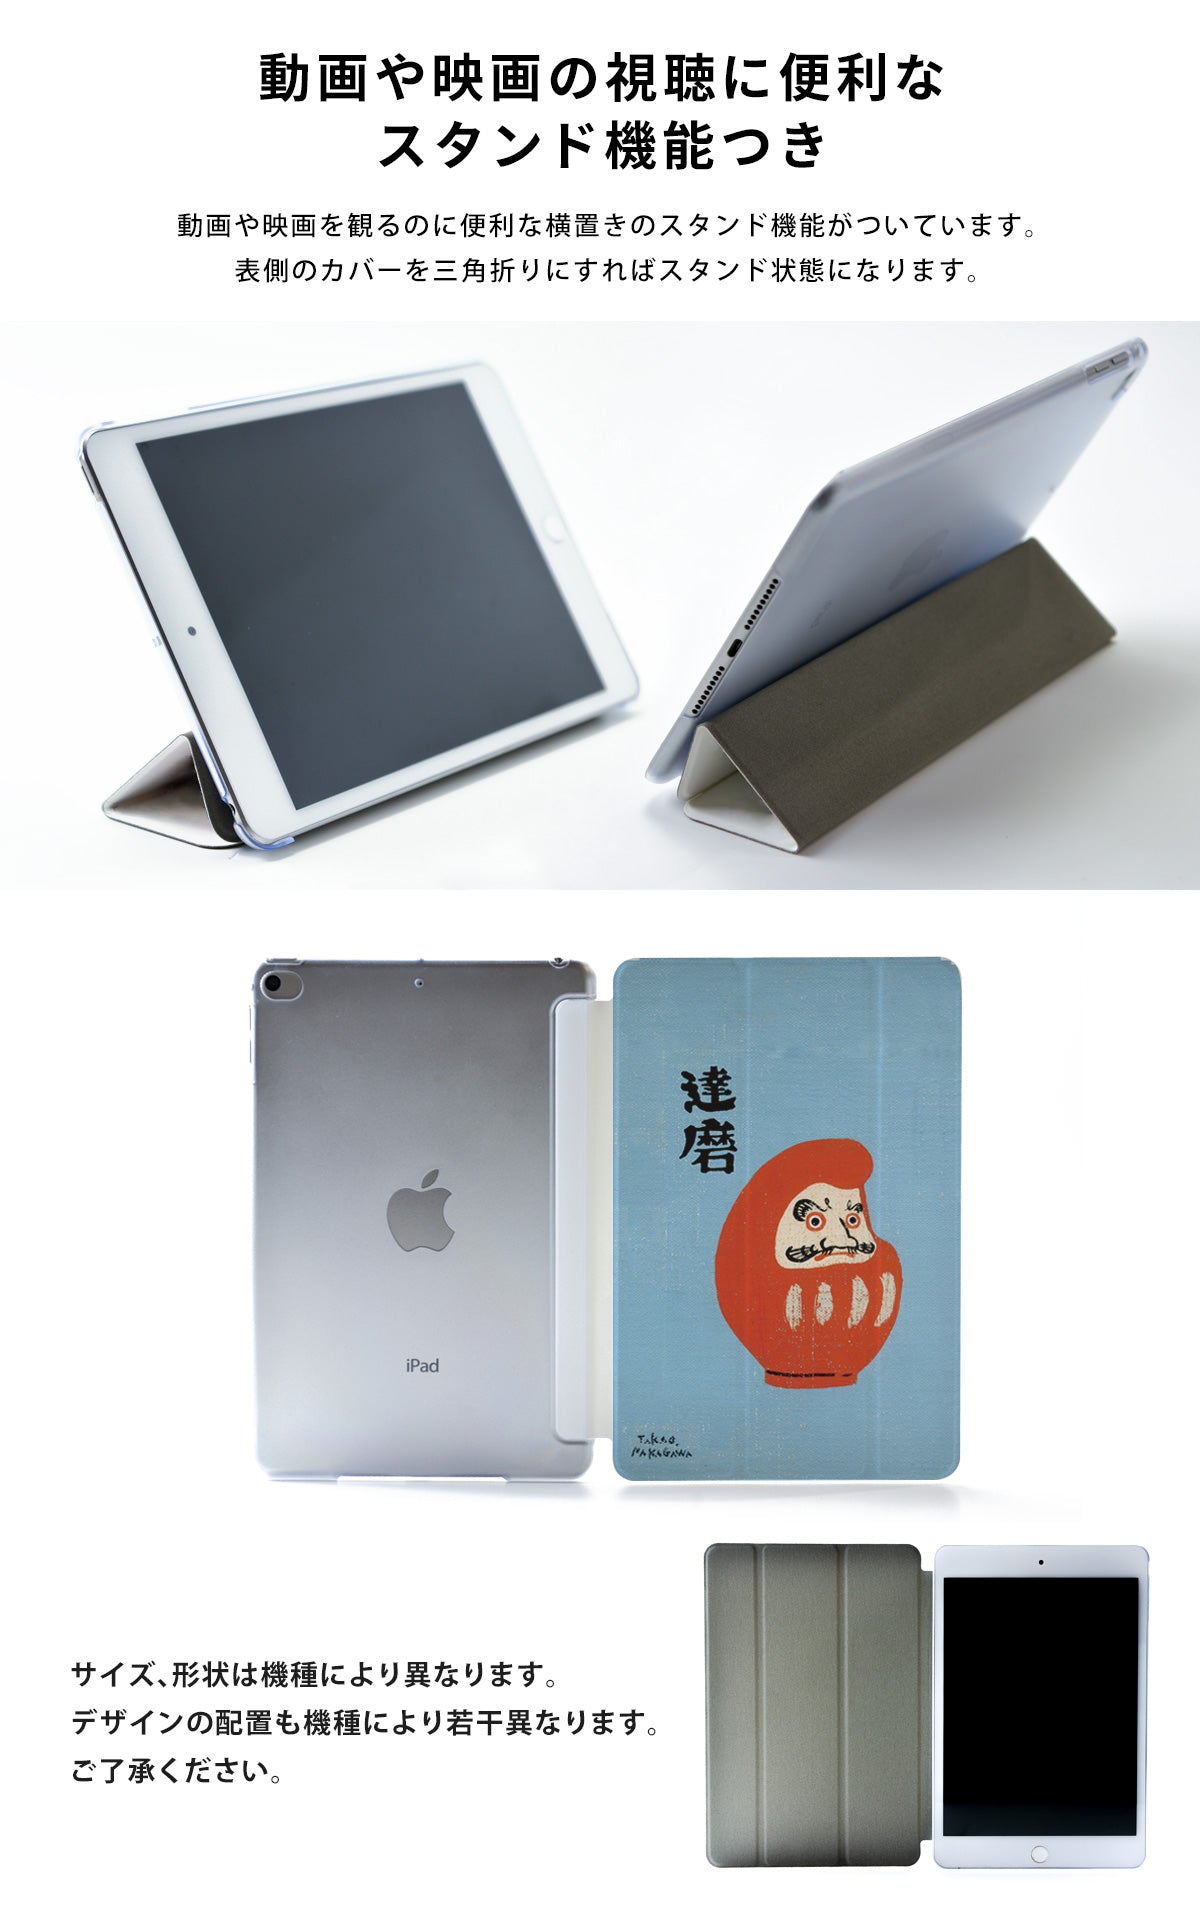 iPadケースはスタンド機能付。ほとんどのiPadに対応。